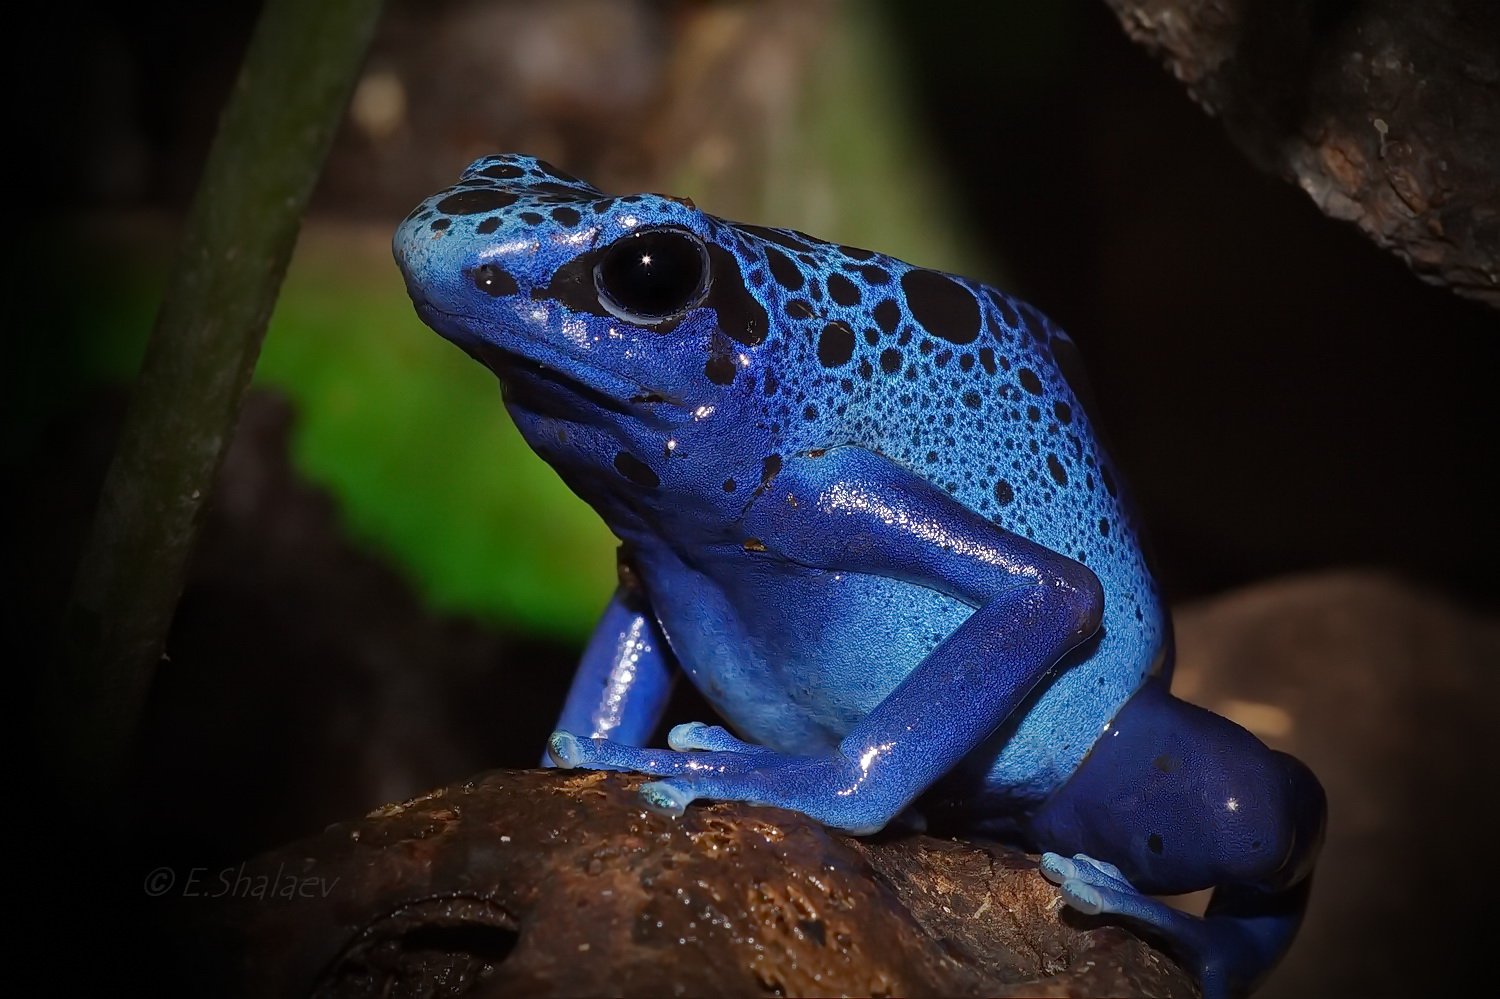 Blue poison dart frog, Dendrobates azureus, Frog, Амфибии, Древолаз, Древолаз голубой, Лягушка, Евгений